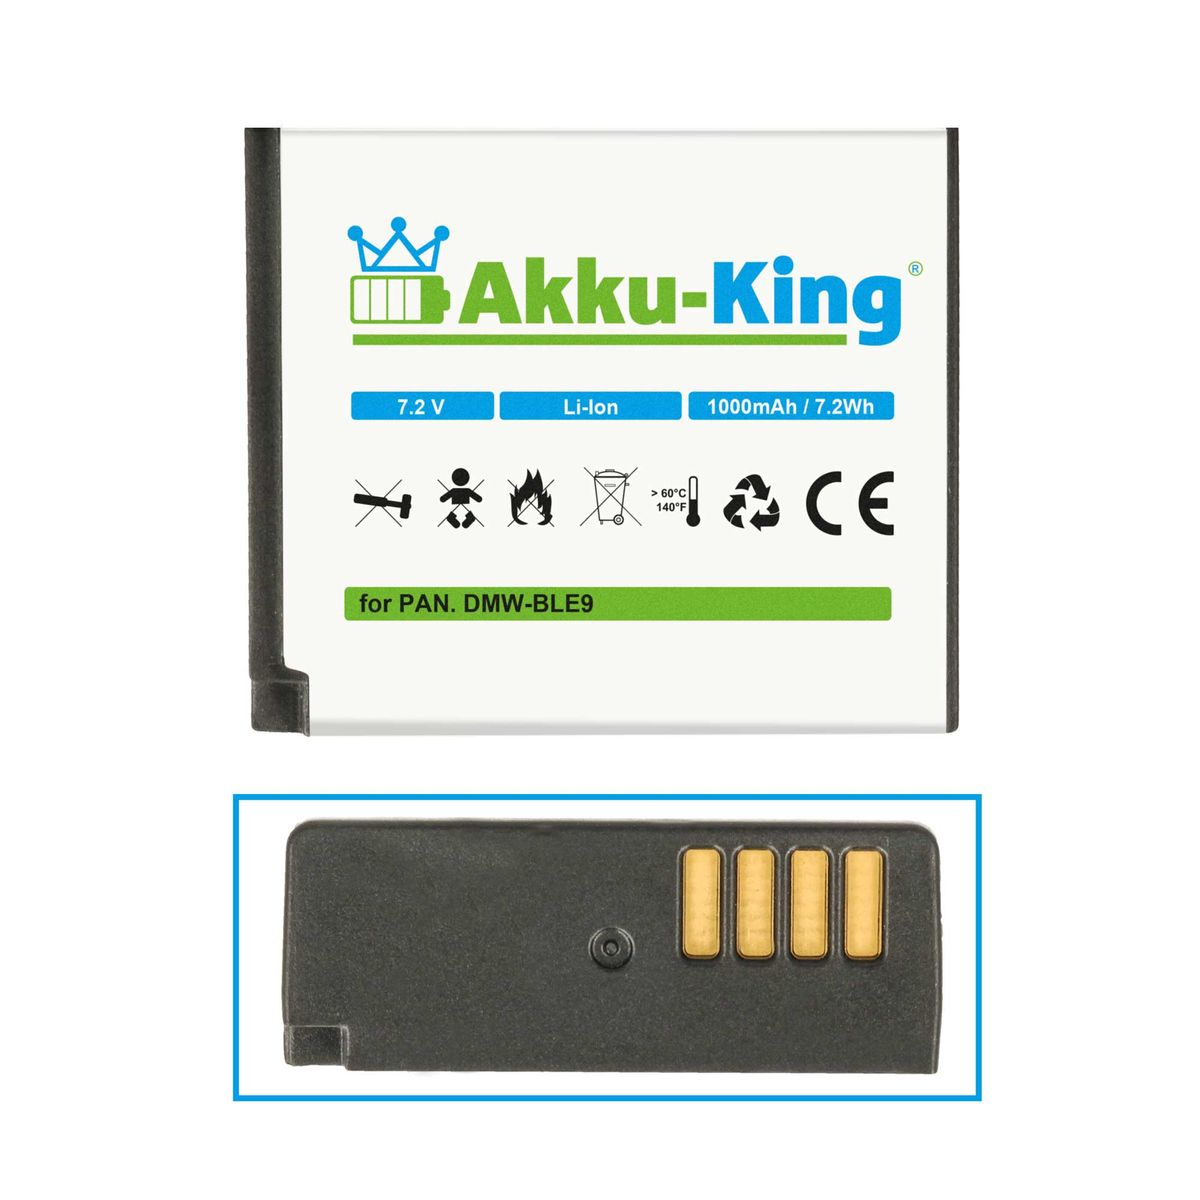 Volt, 1000mAh Kamera-Akku, mit AKKU-KING Li-Ion Akku kompatibel DMW-BLE9 Panasonic 7.2